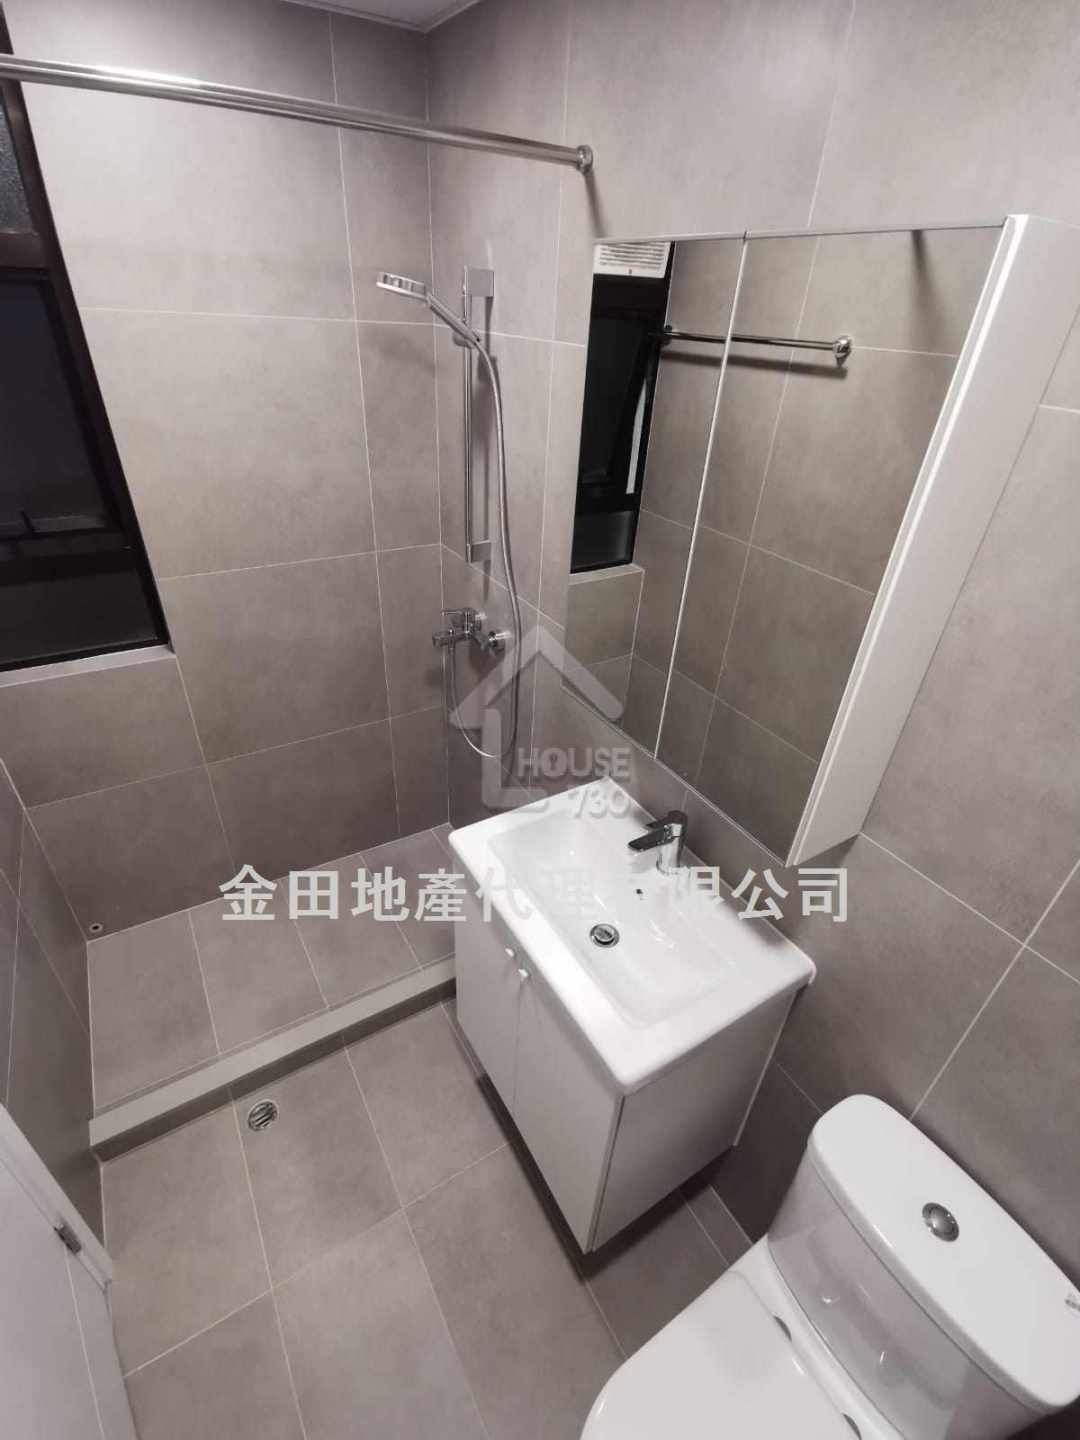 Causeway Bay ISLAND BUILDING Lower Floor Washroom House730-6282622